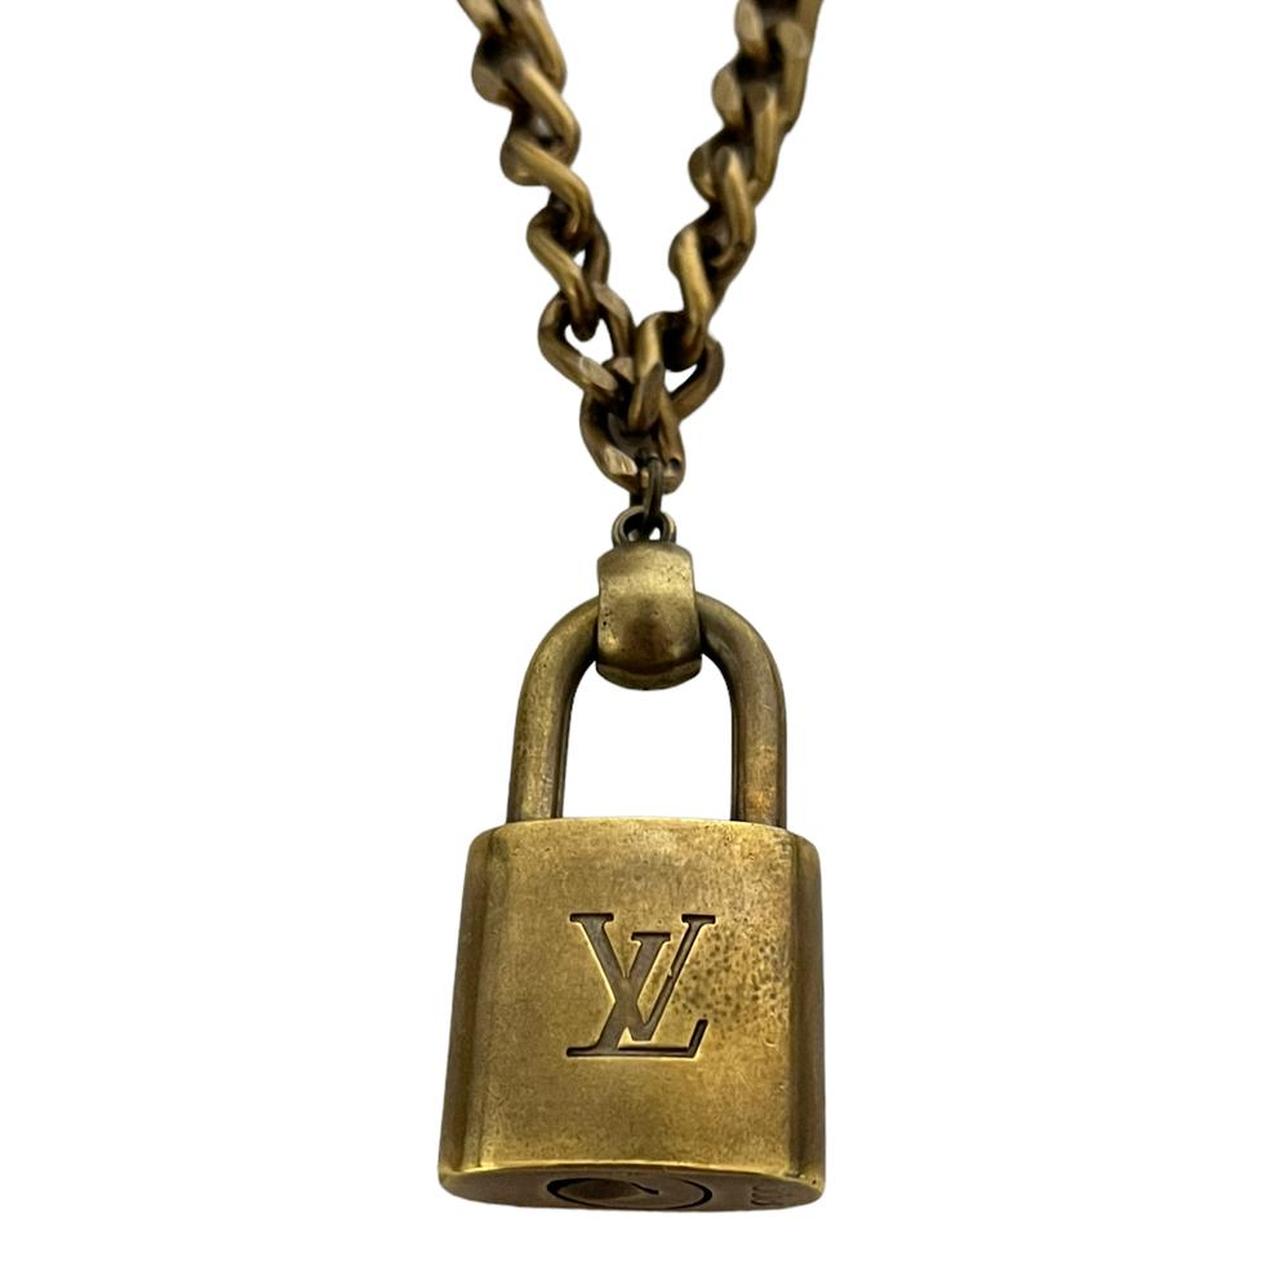 Reworked Original LV lock necklace. 3 chains gold - Depop